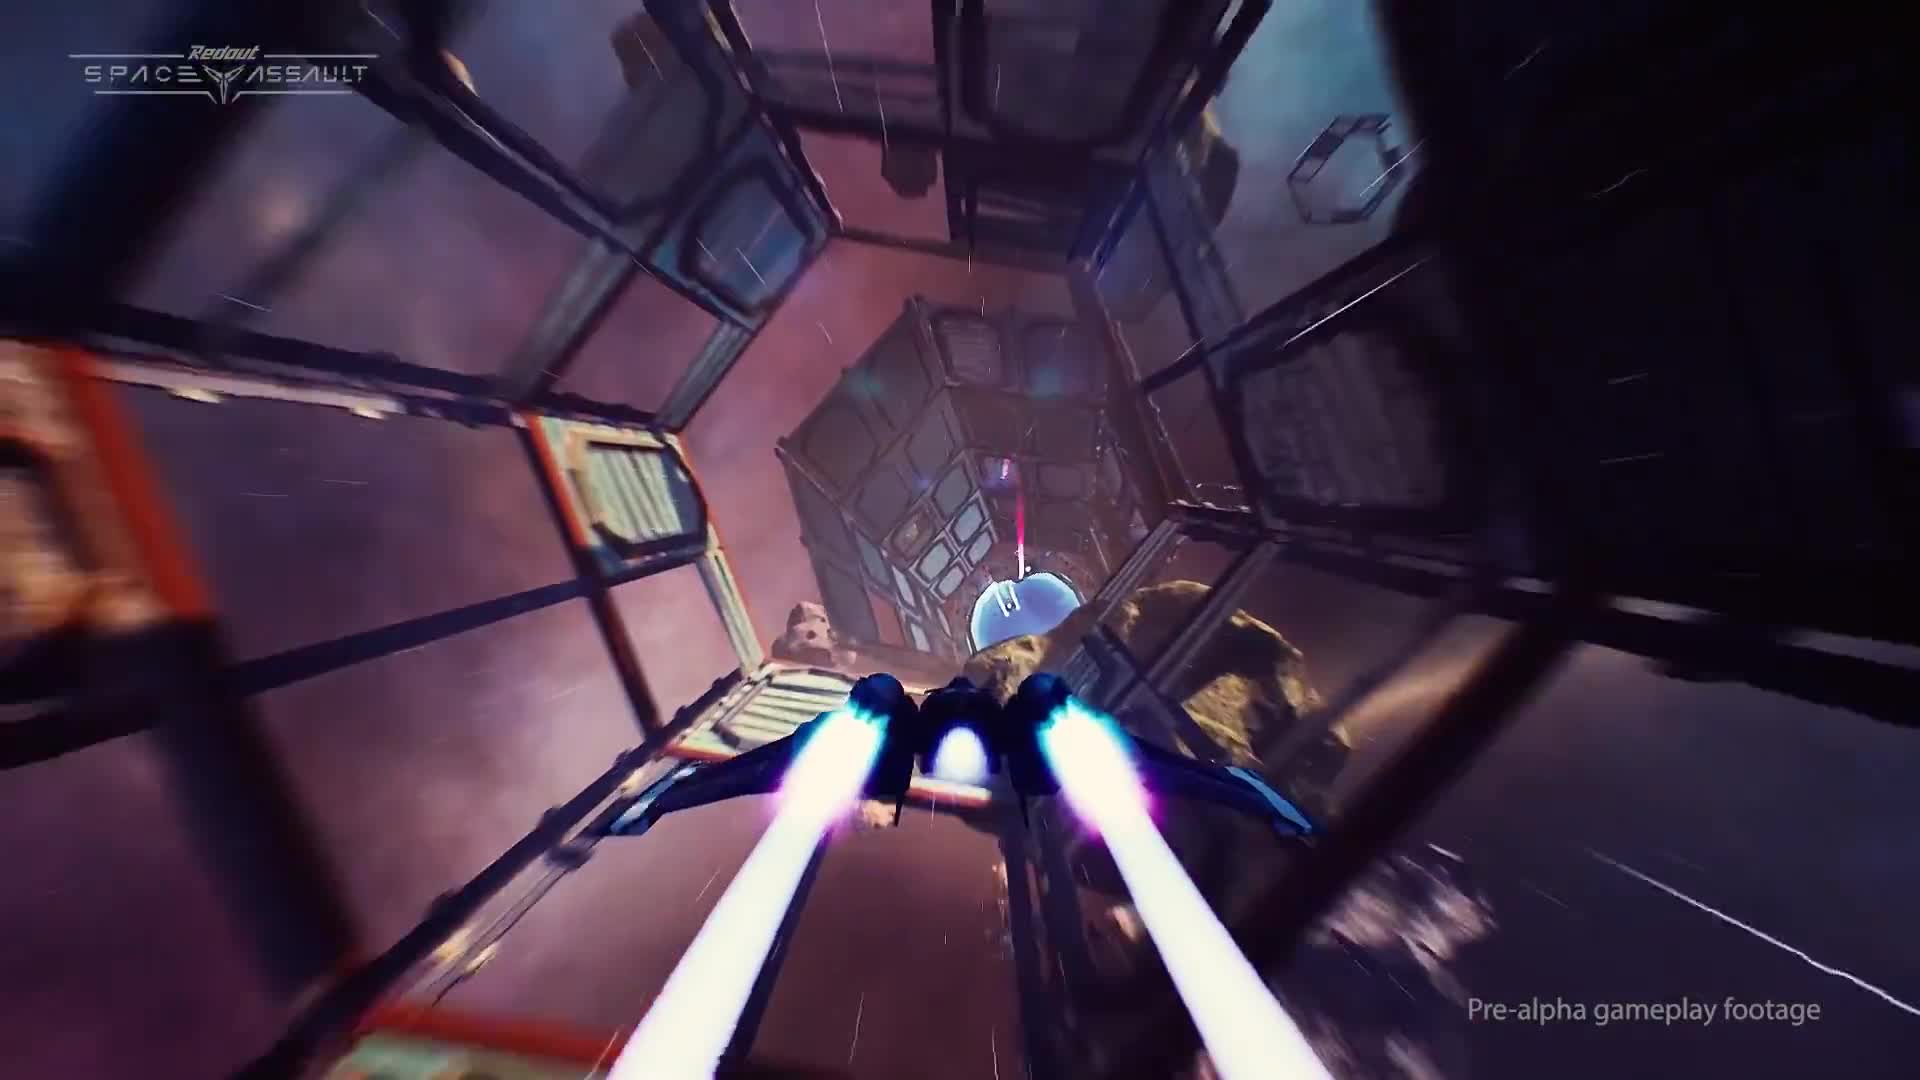 Redout: Space Assault - Pre-alpha Gameplay Trailer